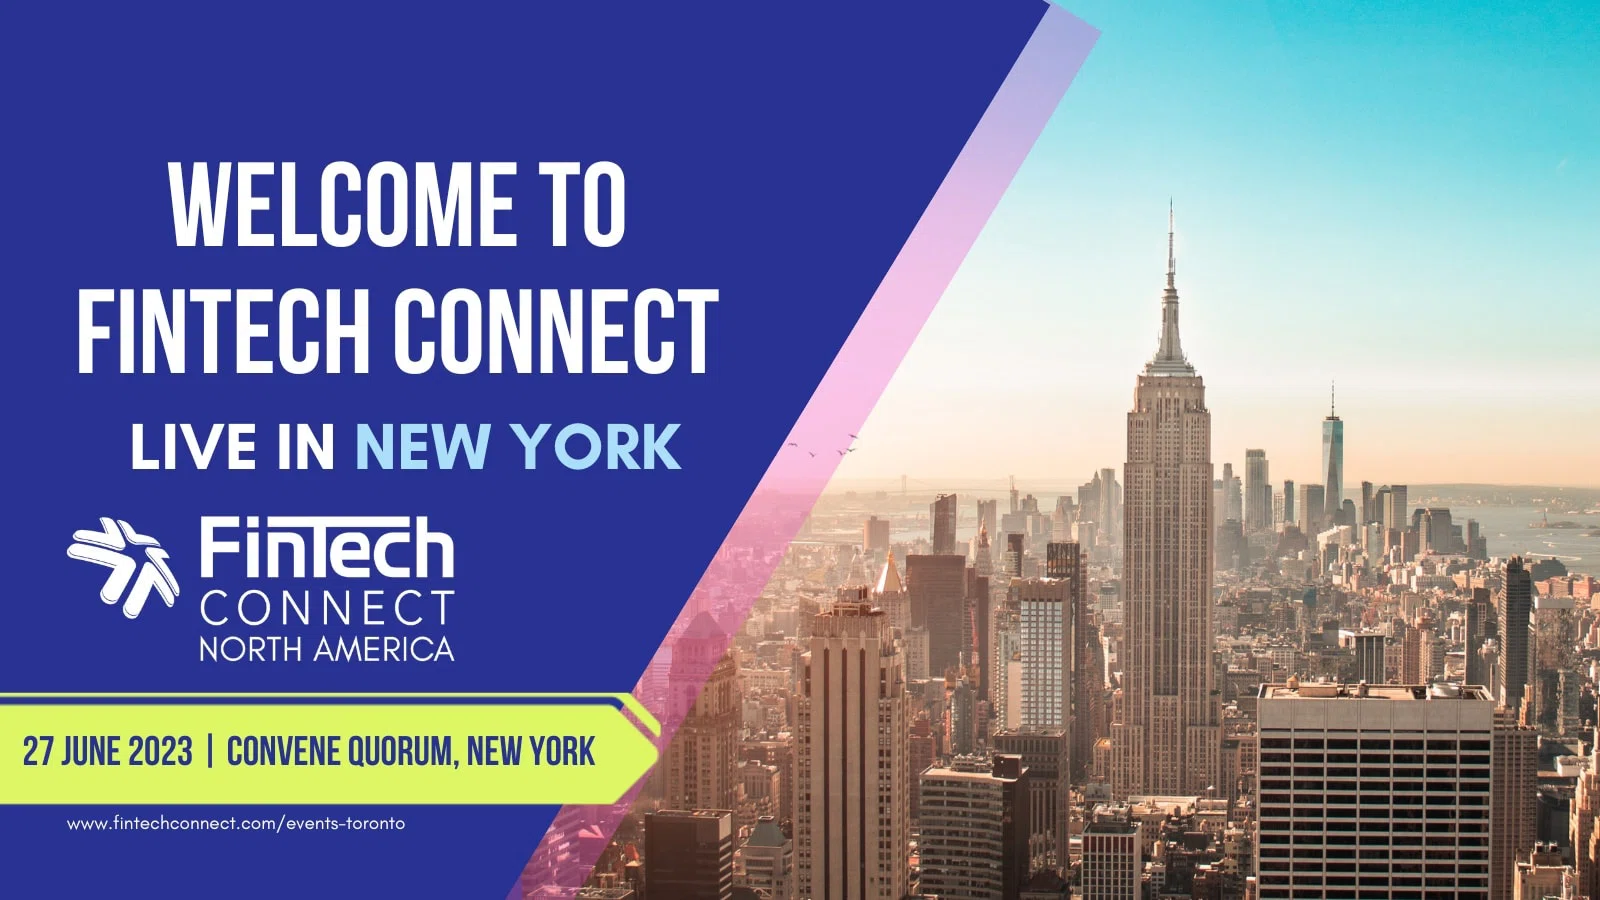 FinTech Connect North America 2023